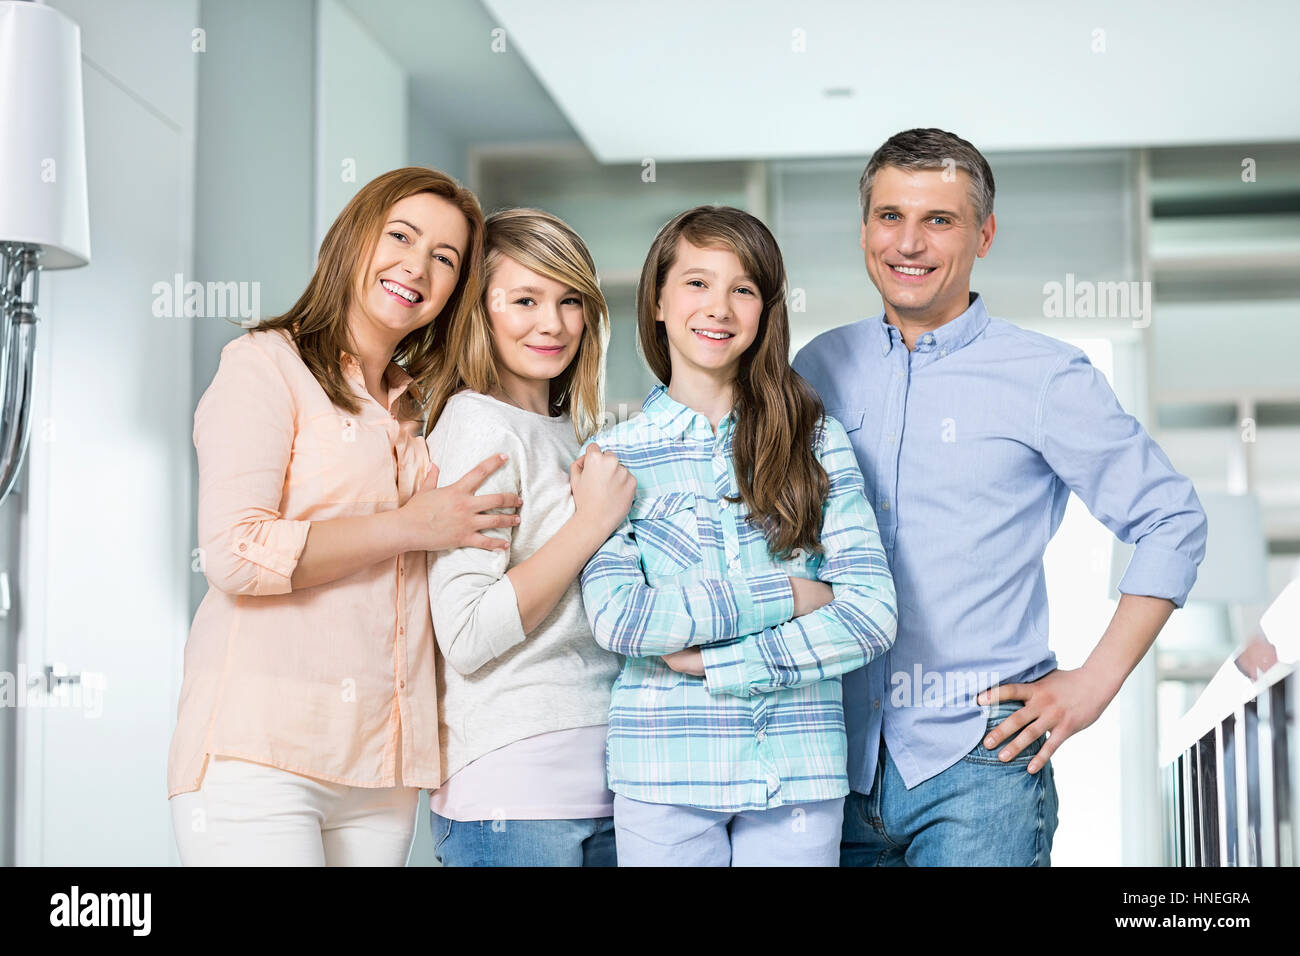 Portrait de famille avec enfants Standing together at home Banque D'Images